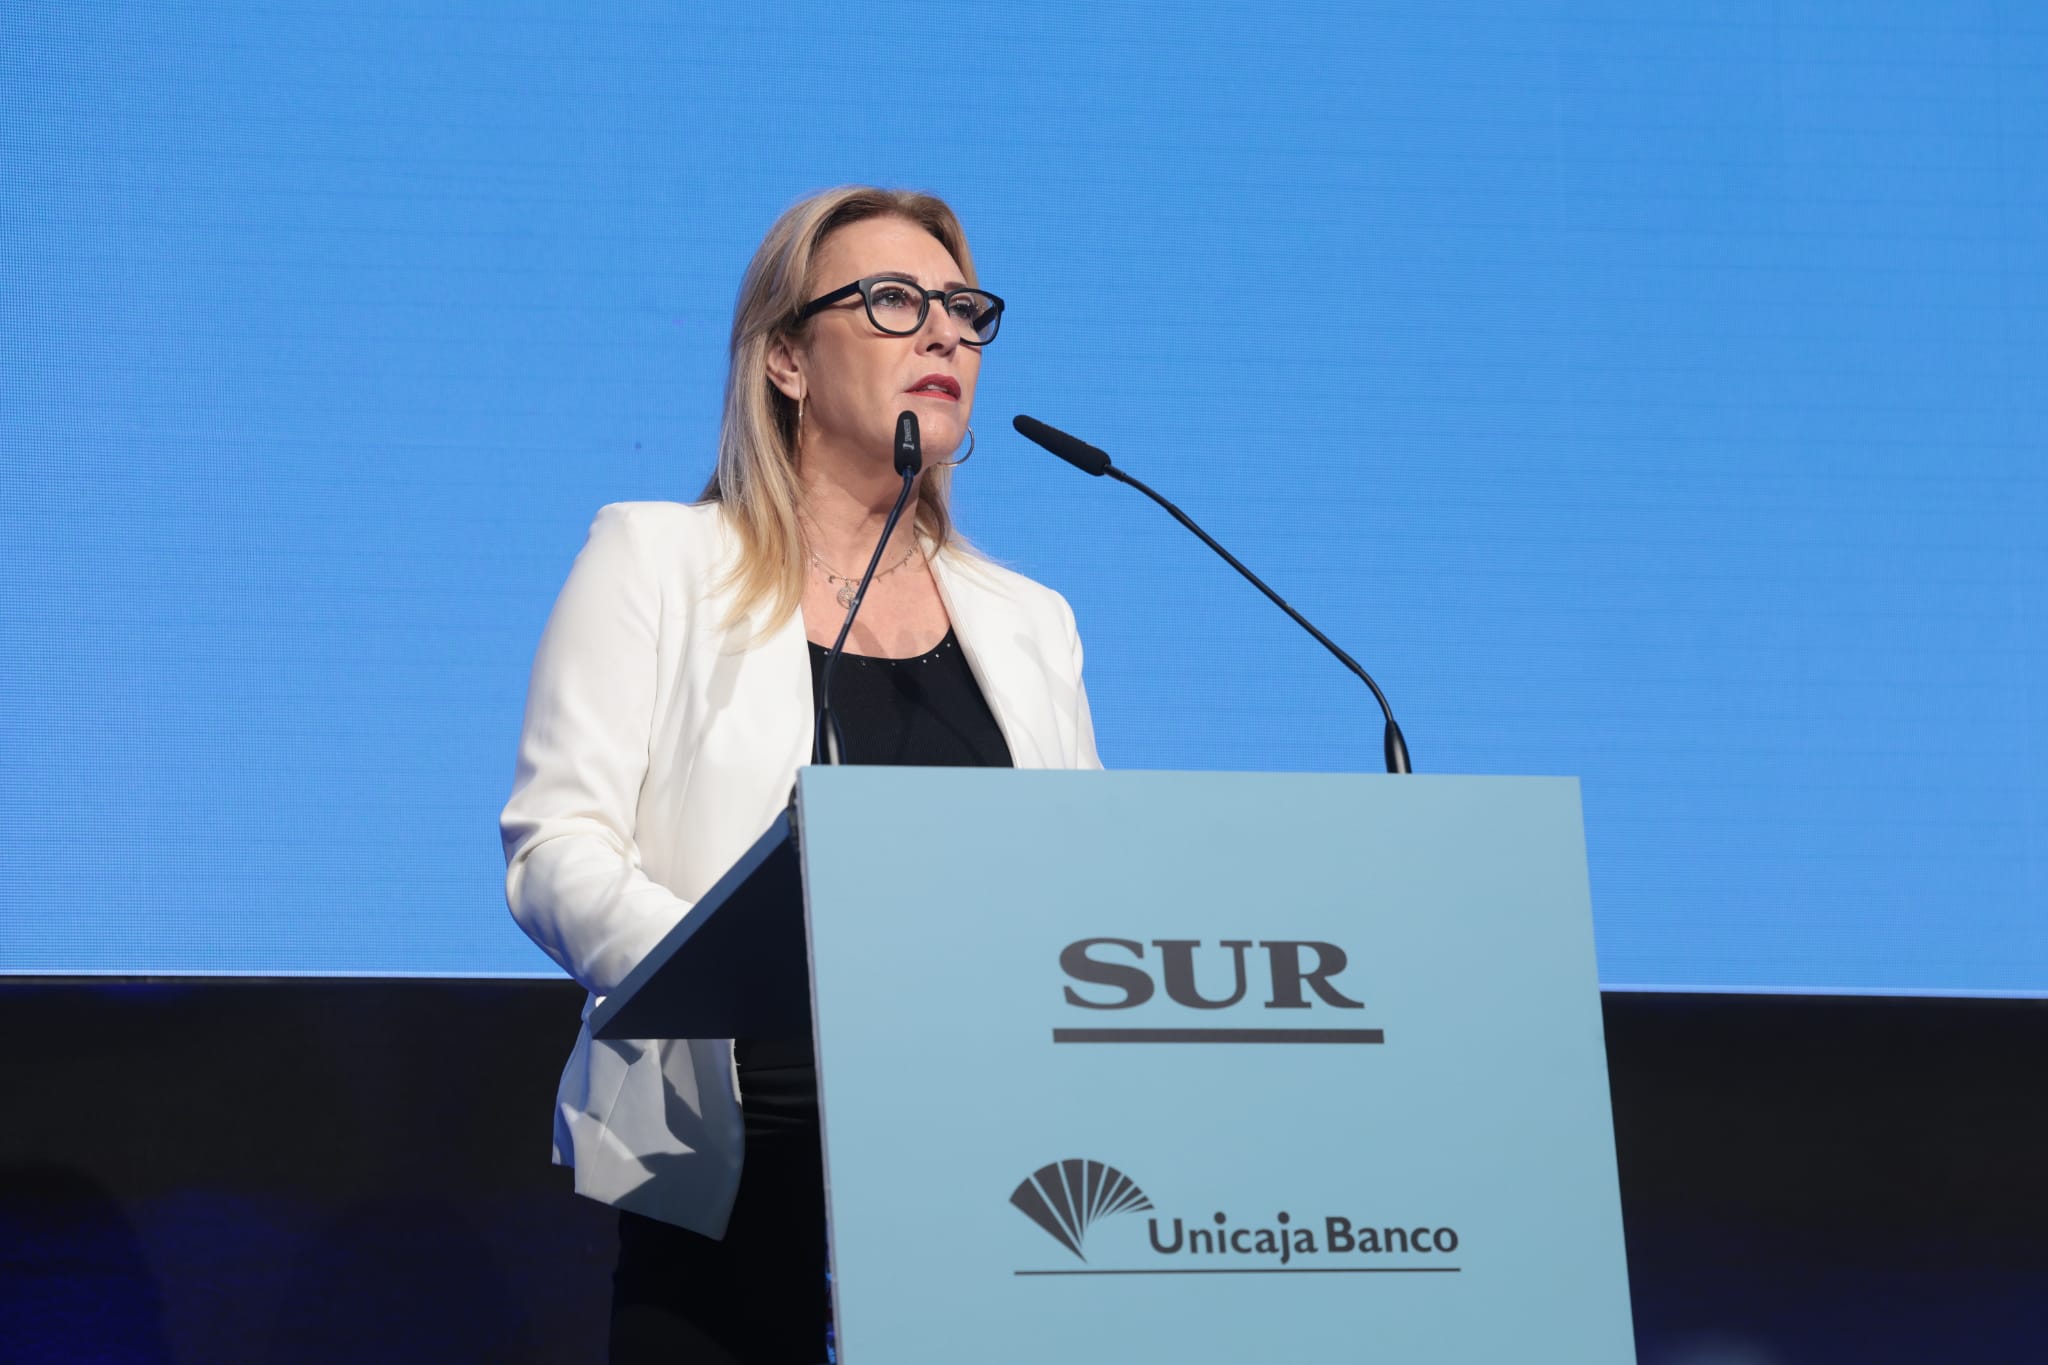 Carolina España speaking at this Monday morning's meeting - organised by SUR and Unicaja Banco